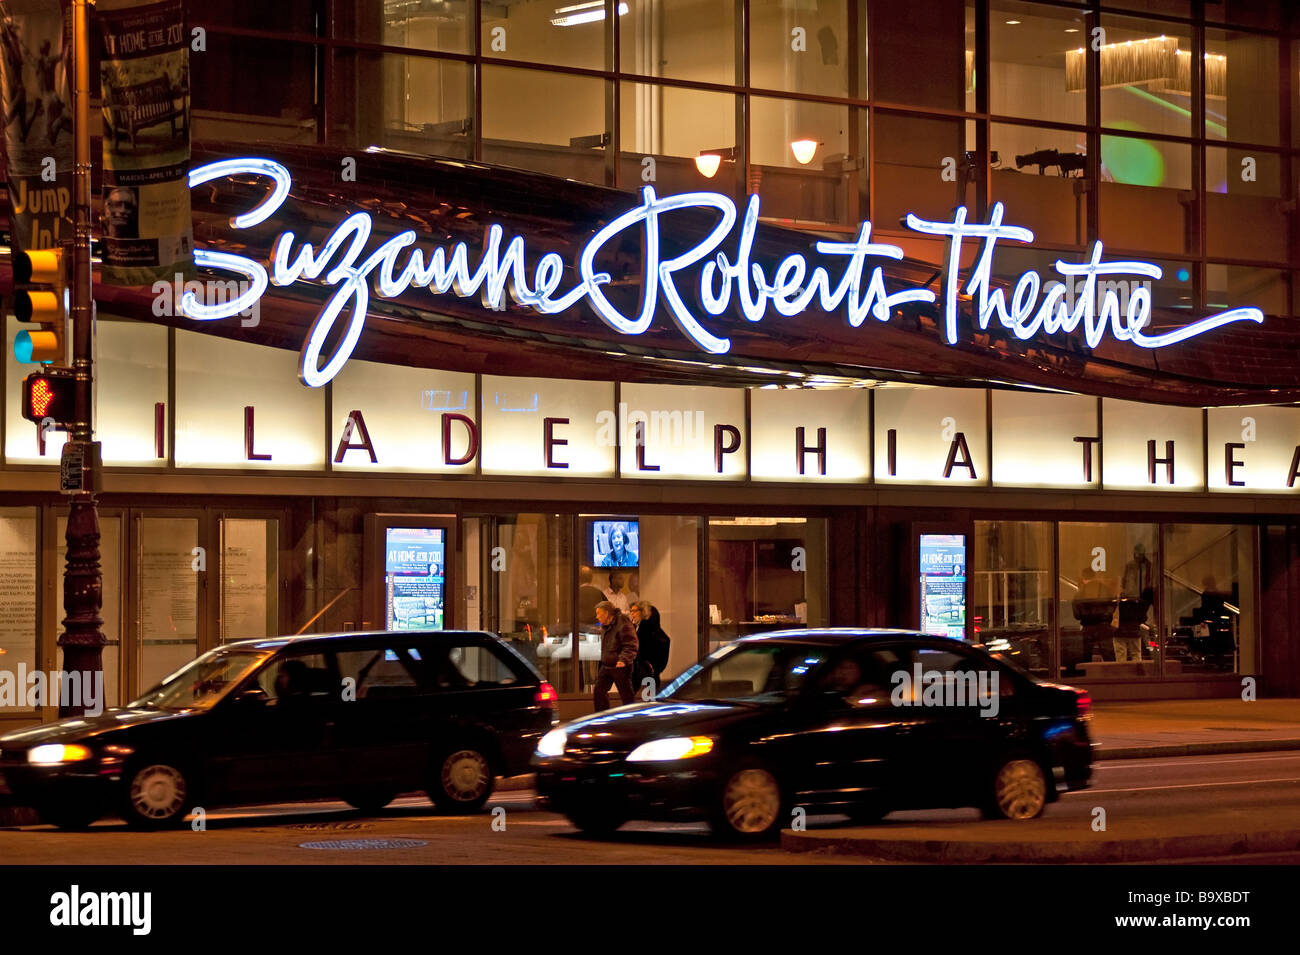 Suzanne Roberts Theatre on Broad Street Philadelphia Pennsylvania USA Stock Photo